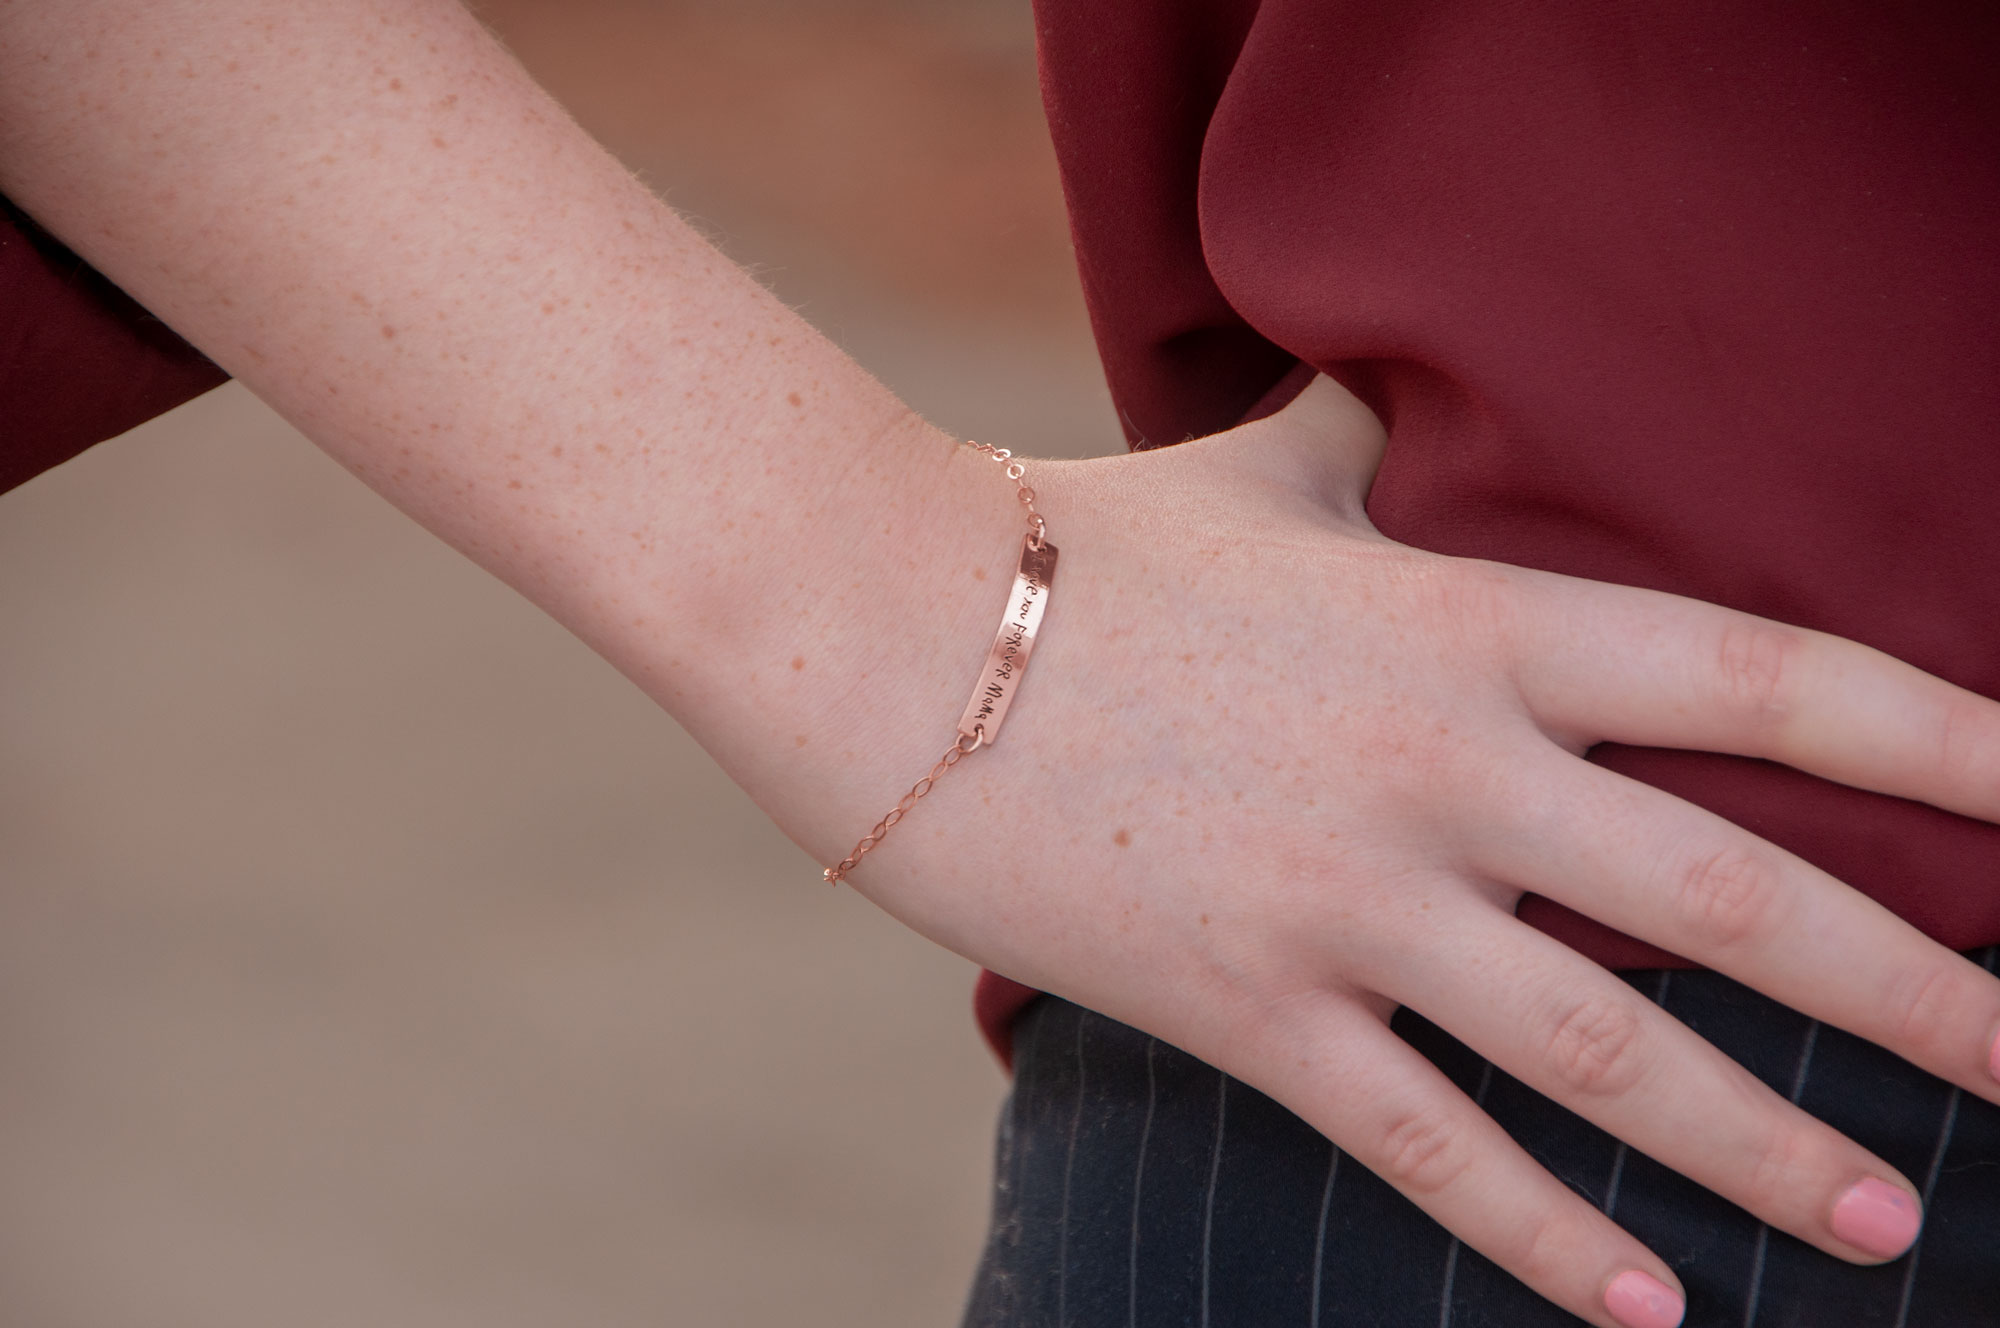 Buy Dainty Heart Rhinestone Rose Gold Bracelet Charm at Amazon.in